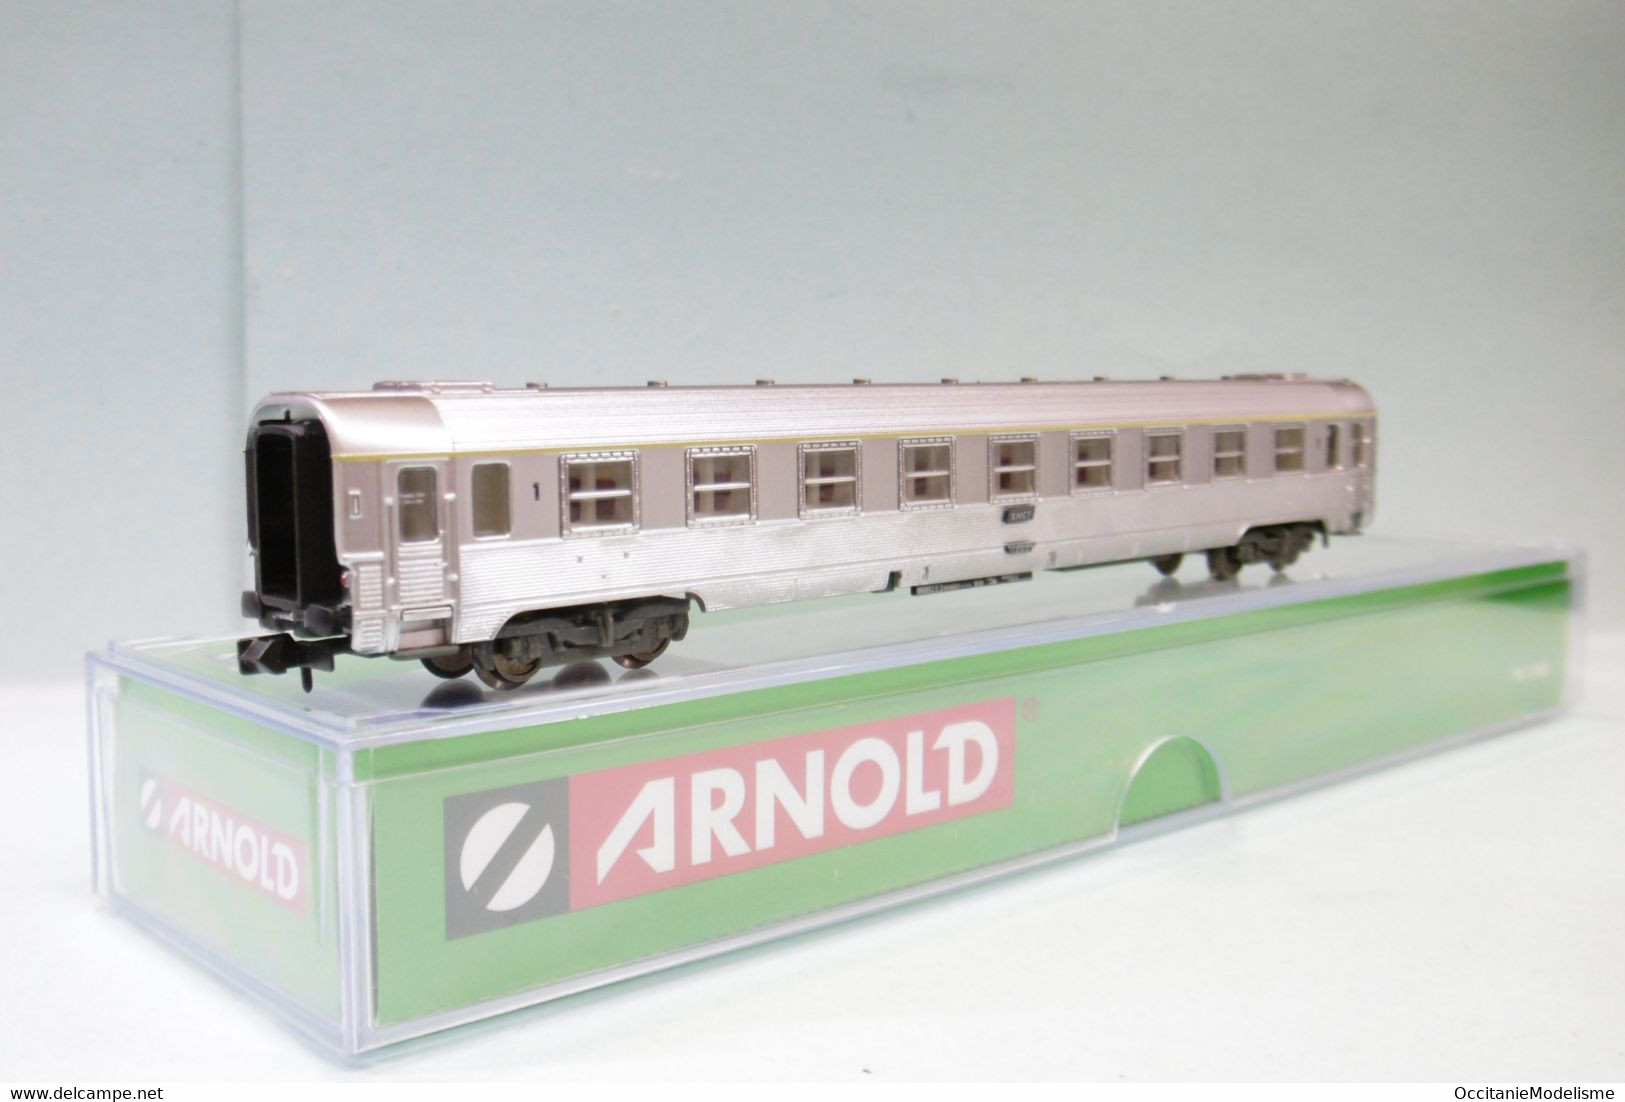 Arnold - Voiture DEV INOX A9 1ère Classe SNCF ép. IV Réf. HN4324 Neuf N 1/160 - Passagierwagen